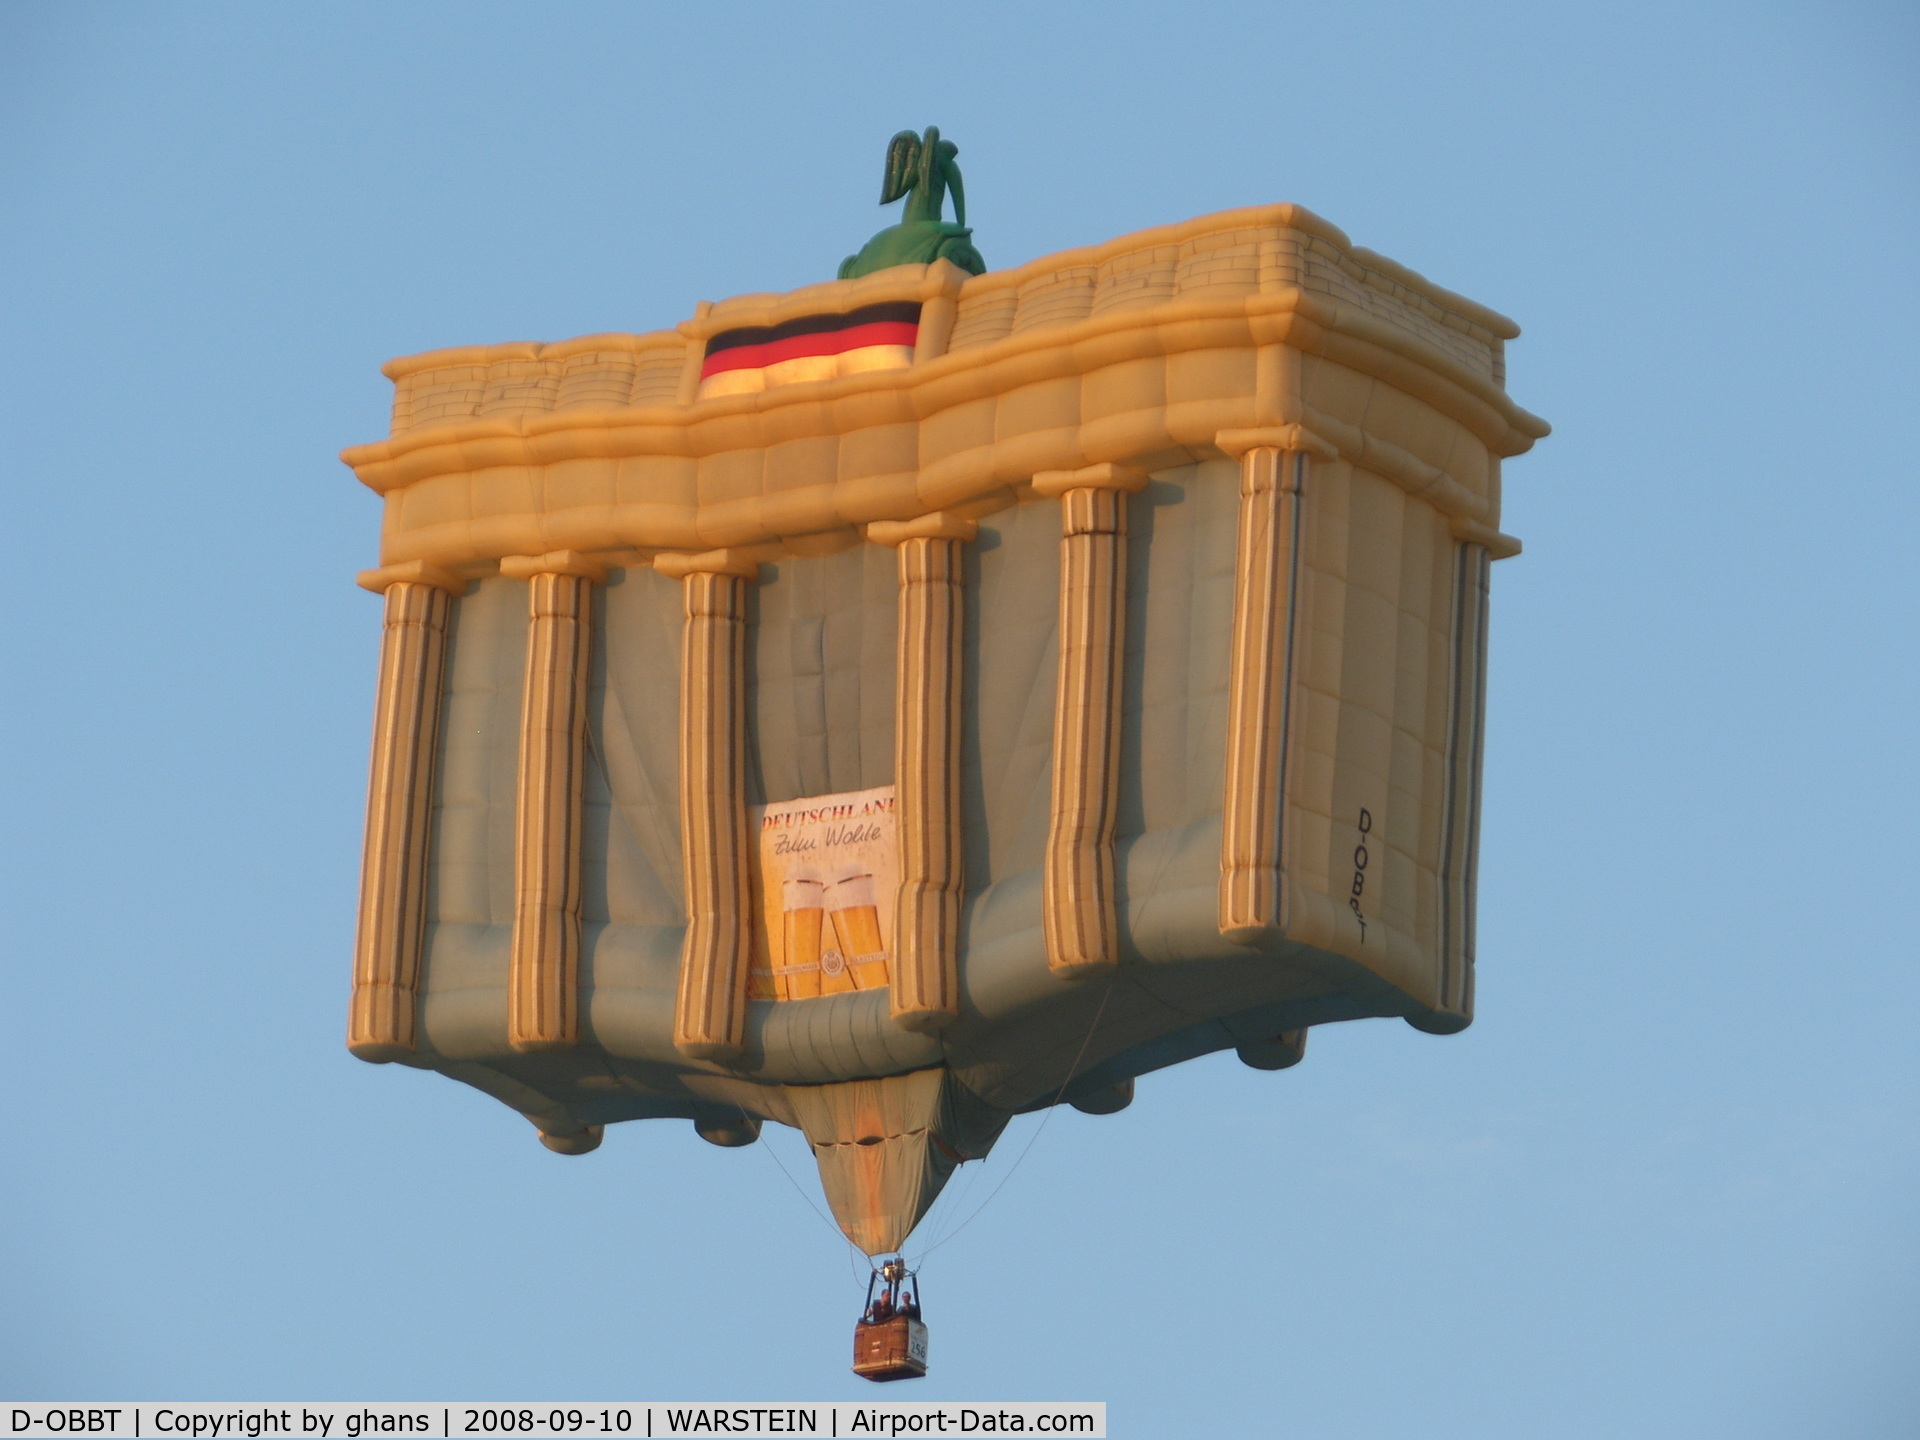 D-OBBT, 1992 Cameron Balloons Brandenburg Tor C/N 2742, Copy of the Brandenburg Tor at Berlin, Germany